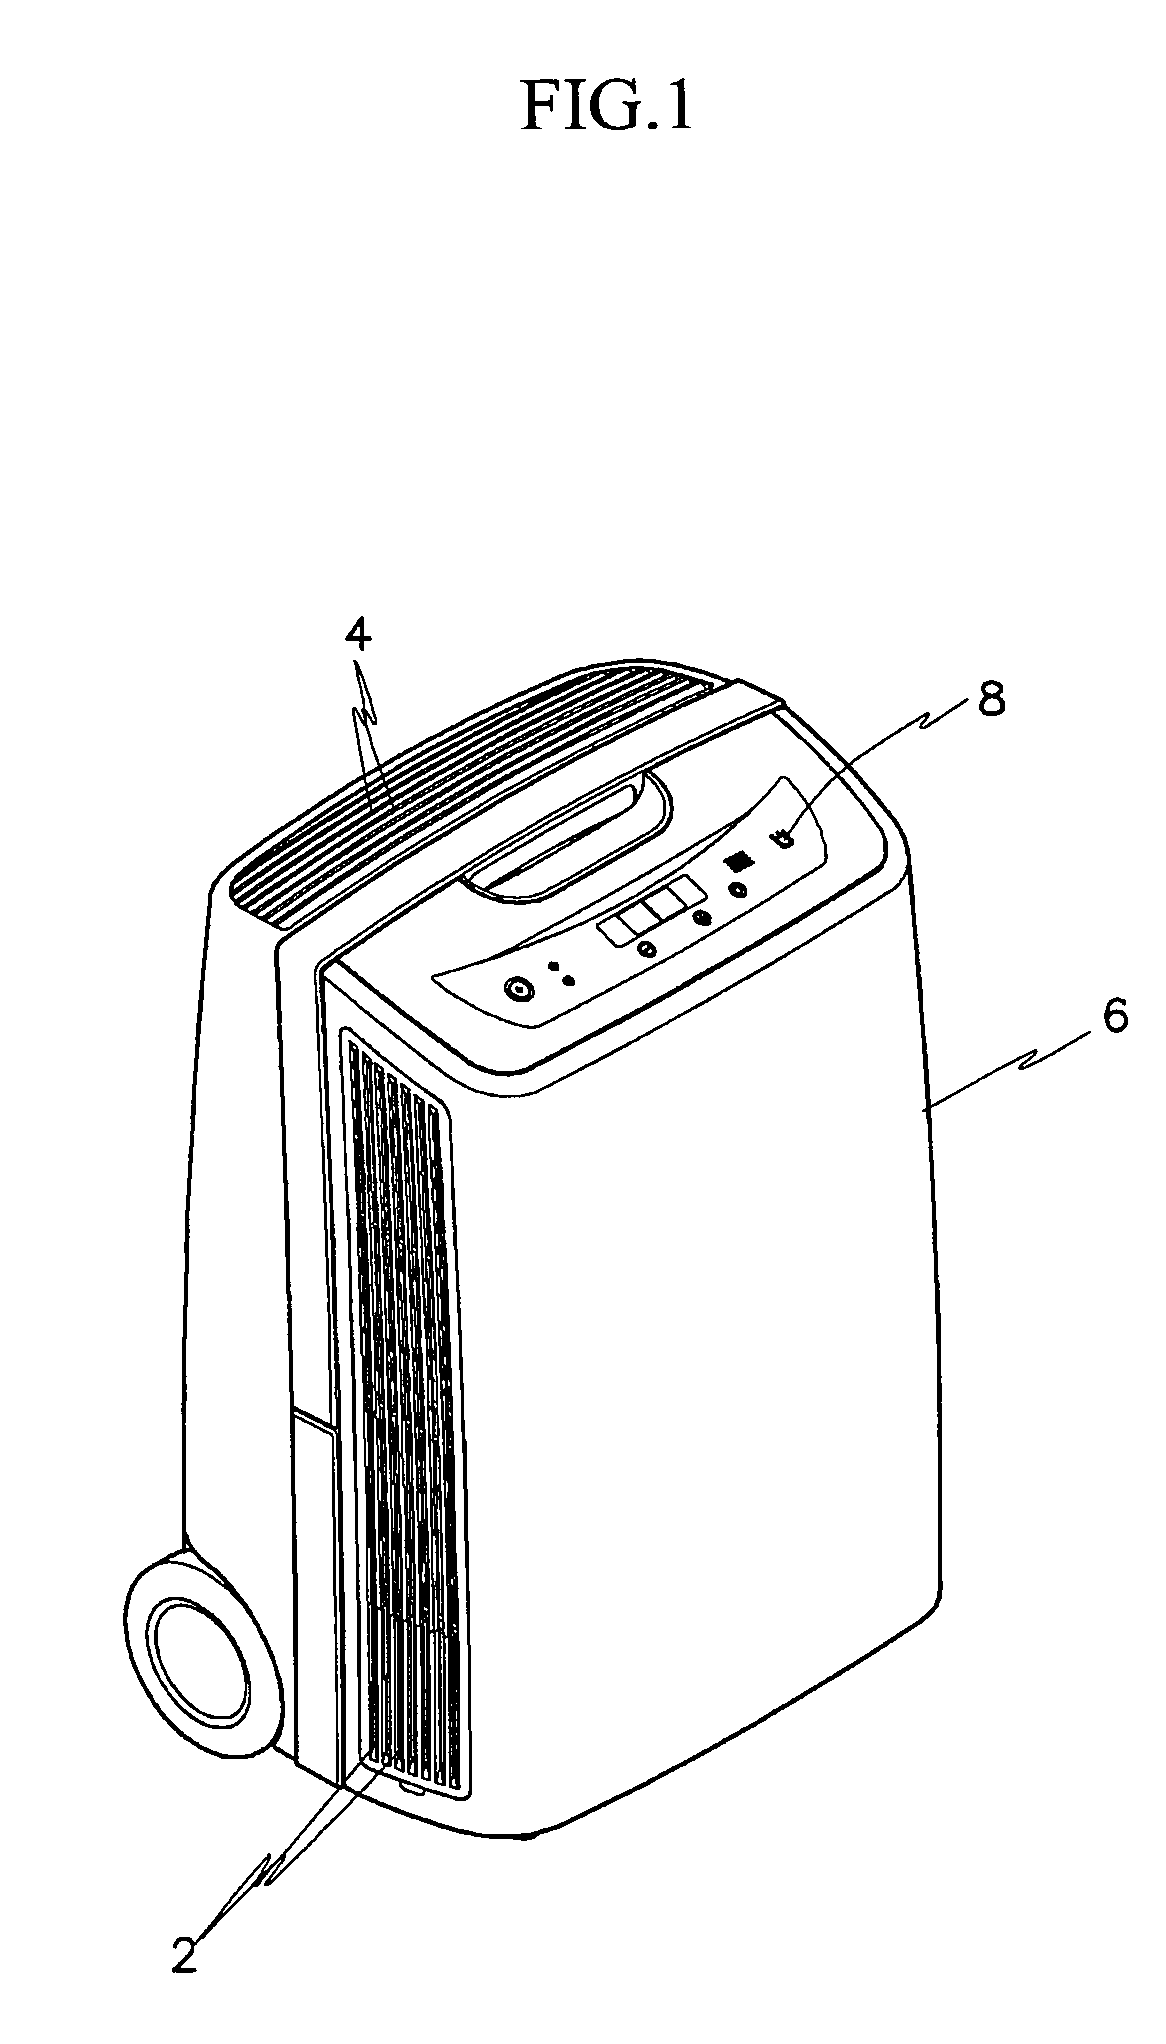 Continuous drain-type dehumidifier